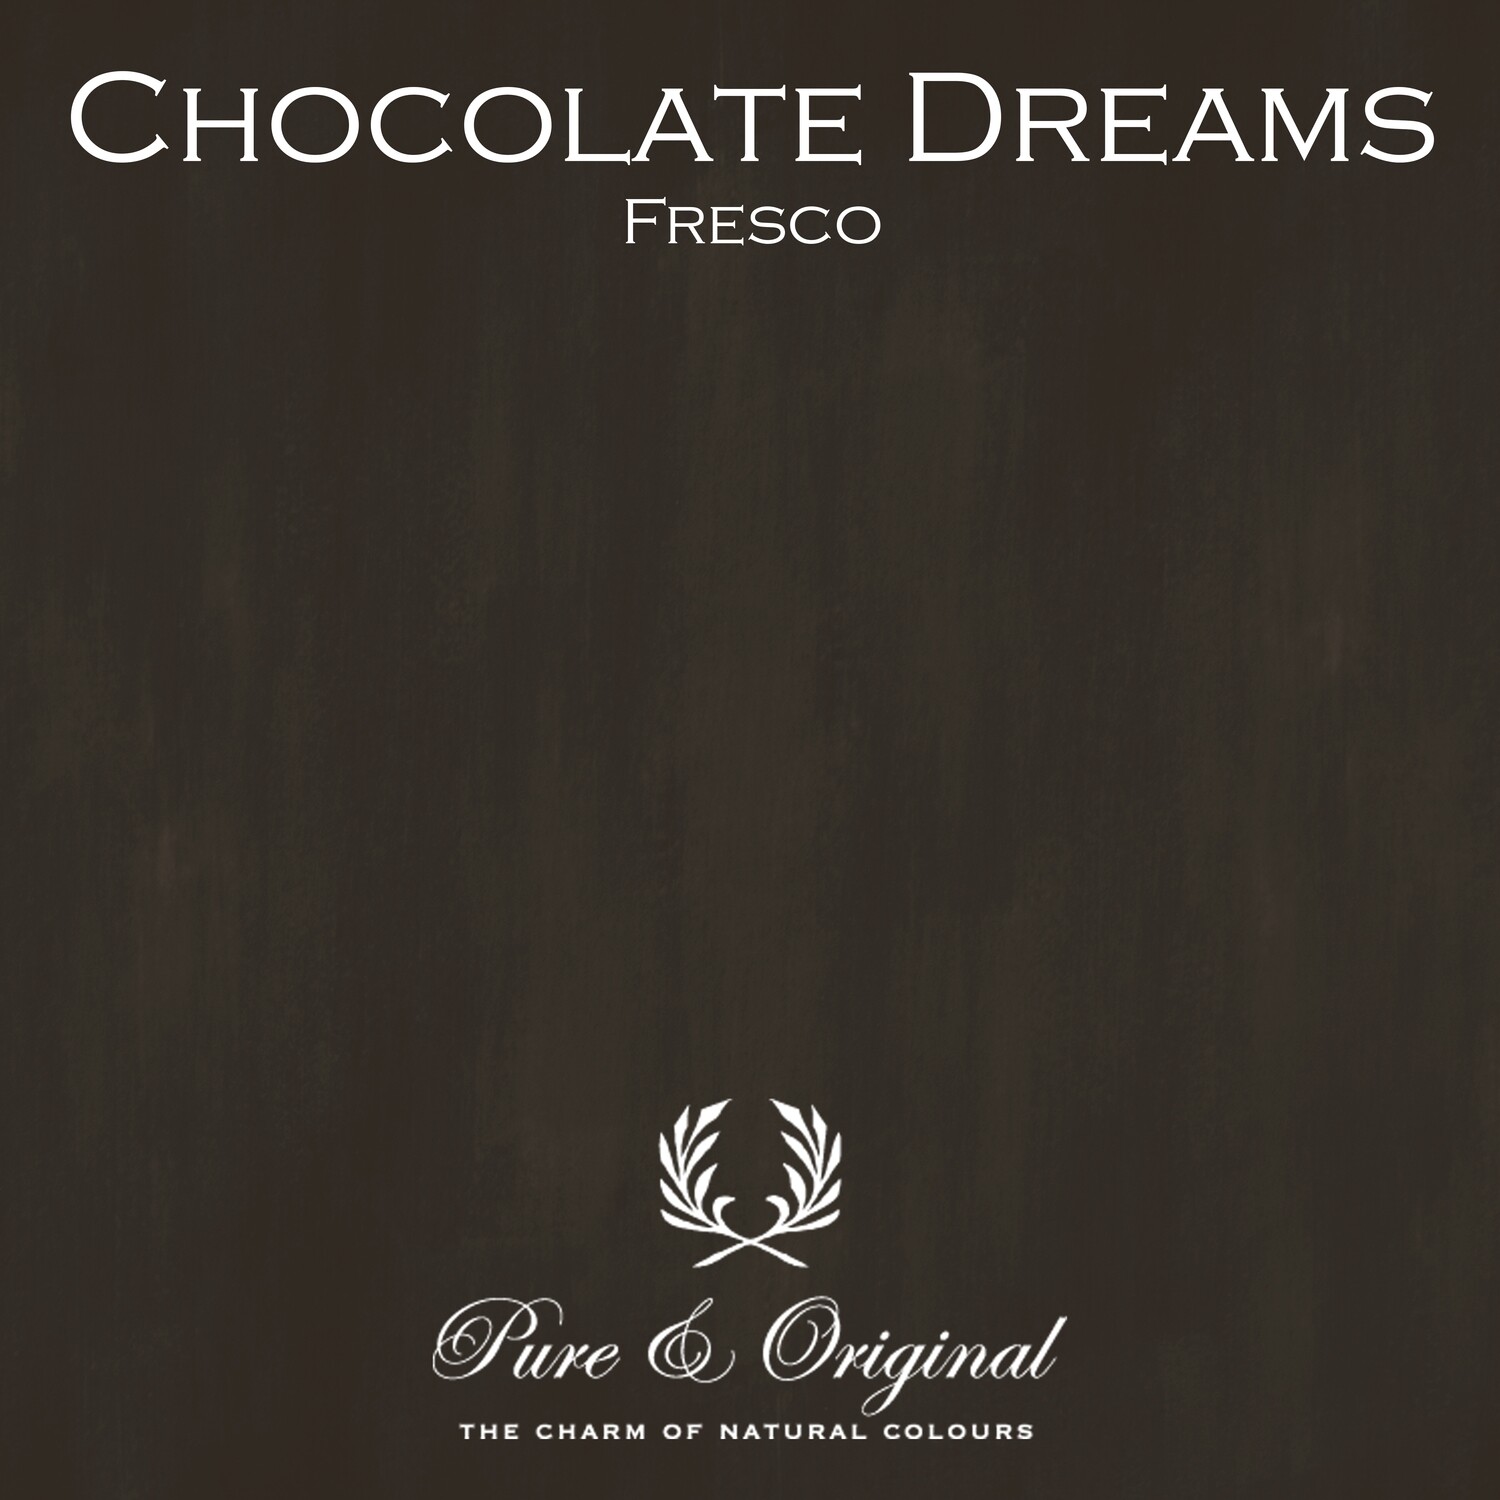 Chocolate Dreams Fresco